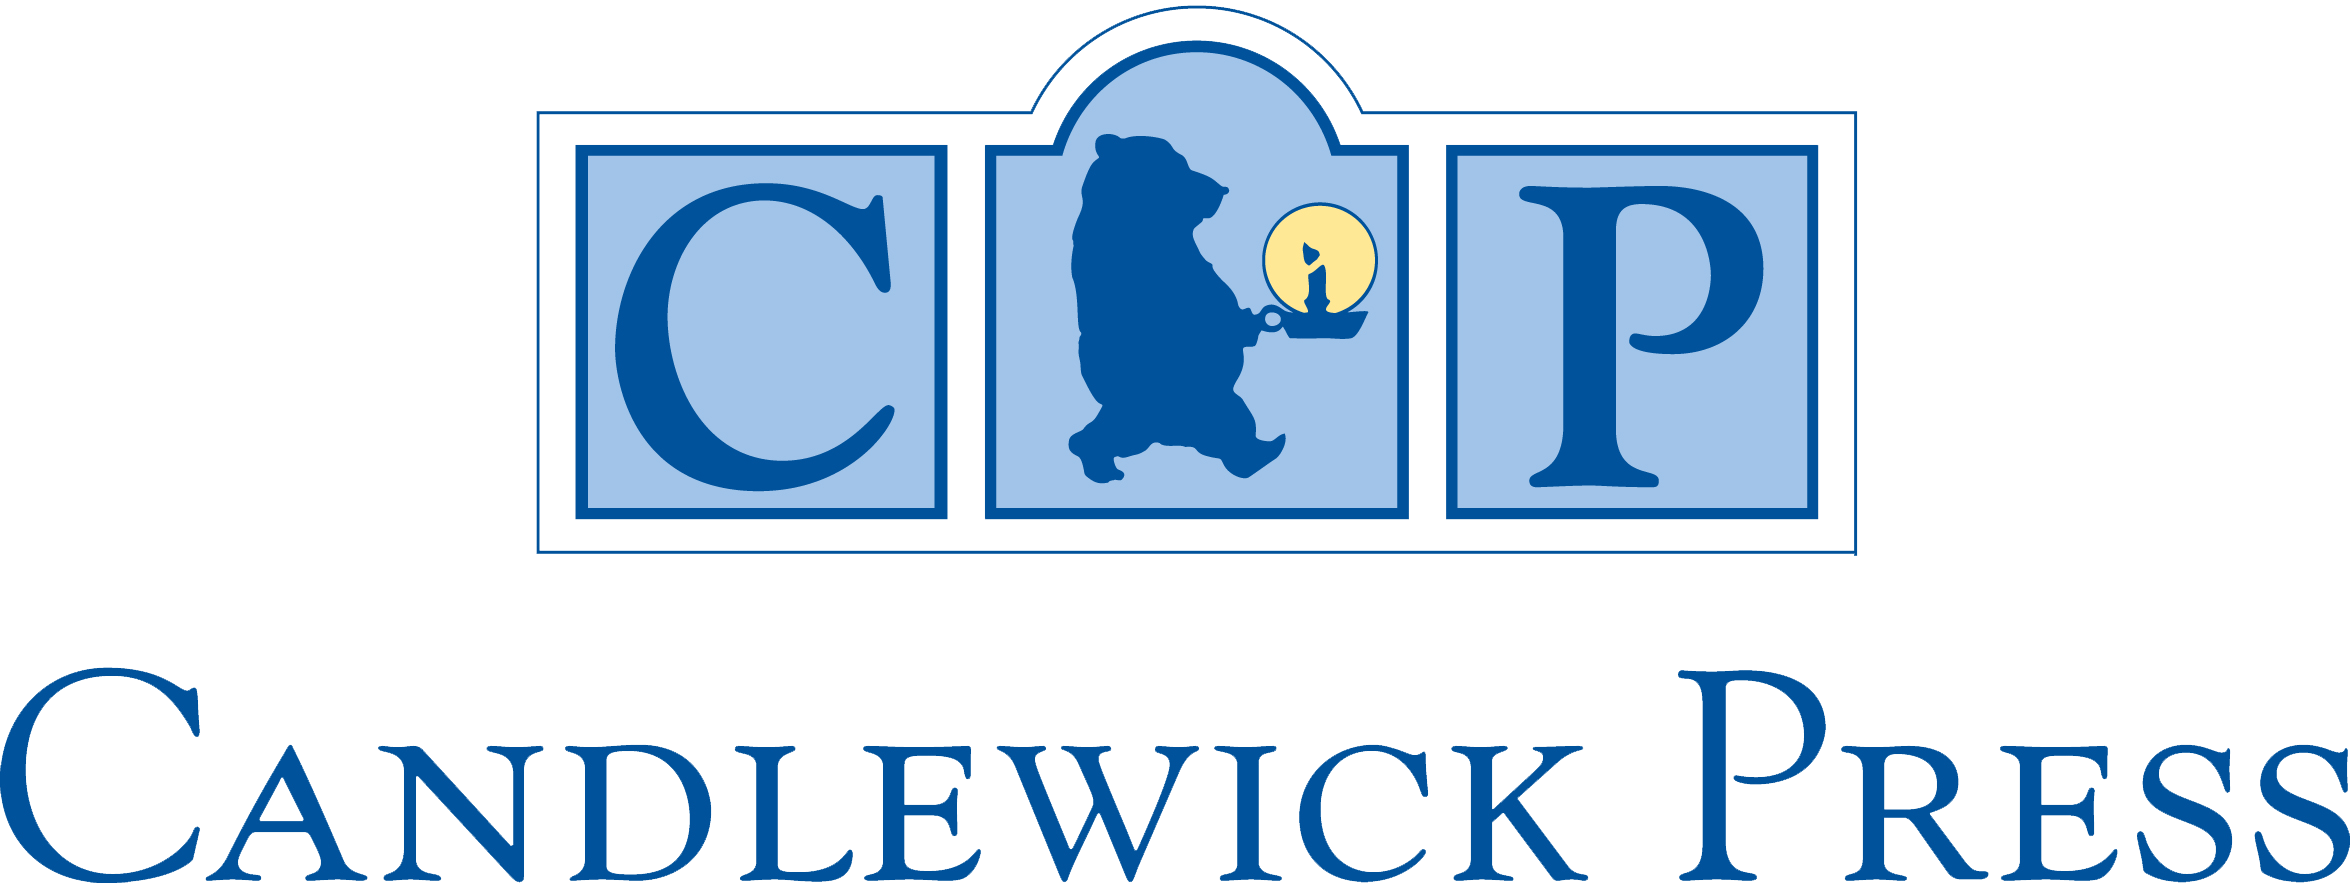 Candlewick Press Logo